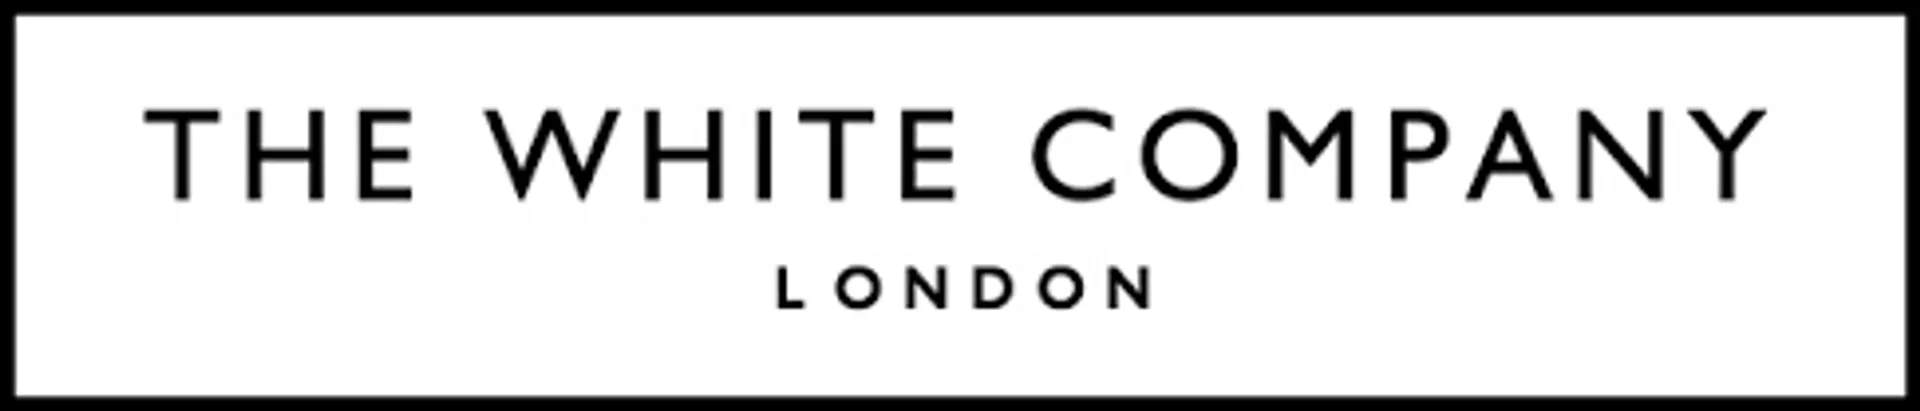 THE WHITE COMPANY logo. Current catalogue